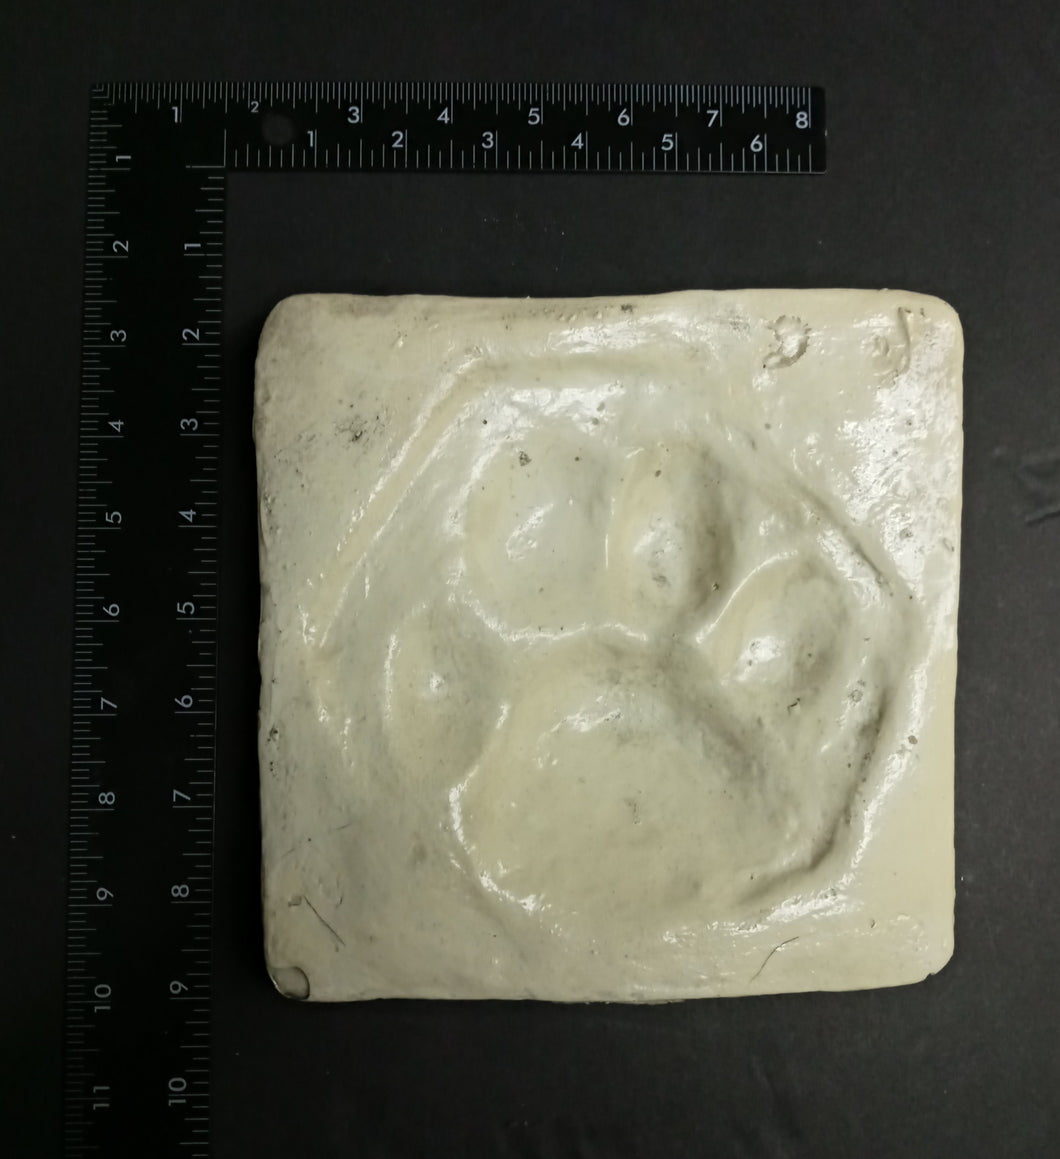 Tiger footprint cast replica track impression